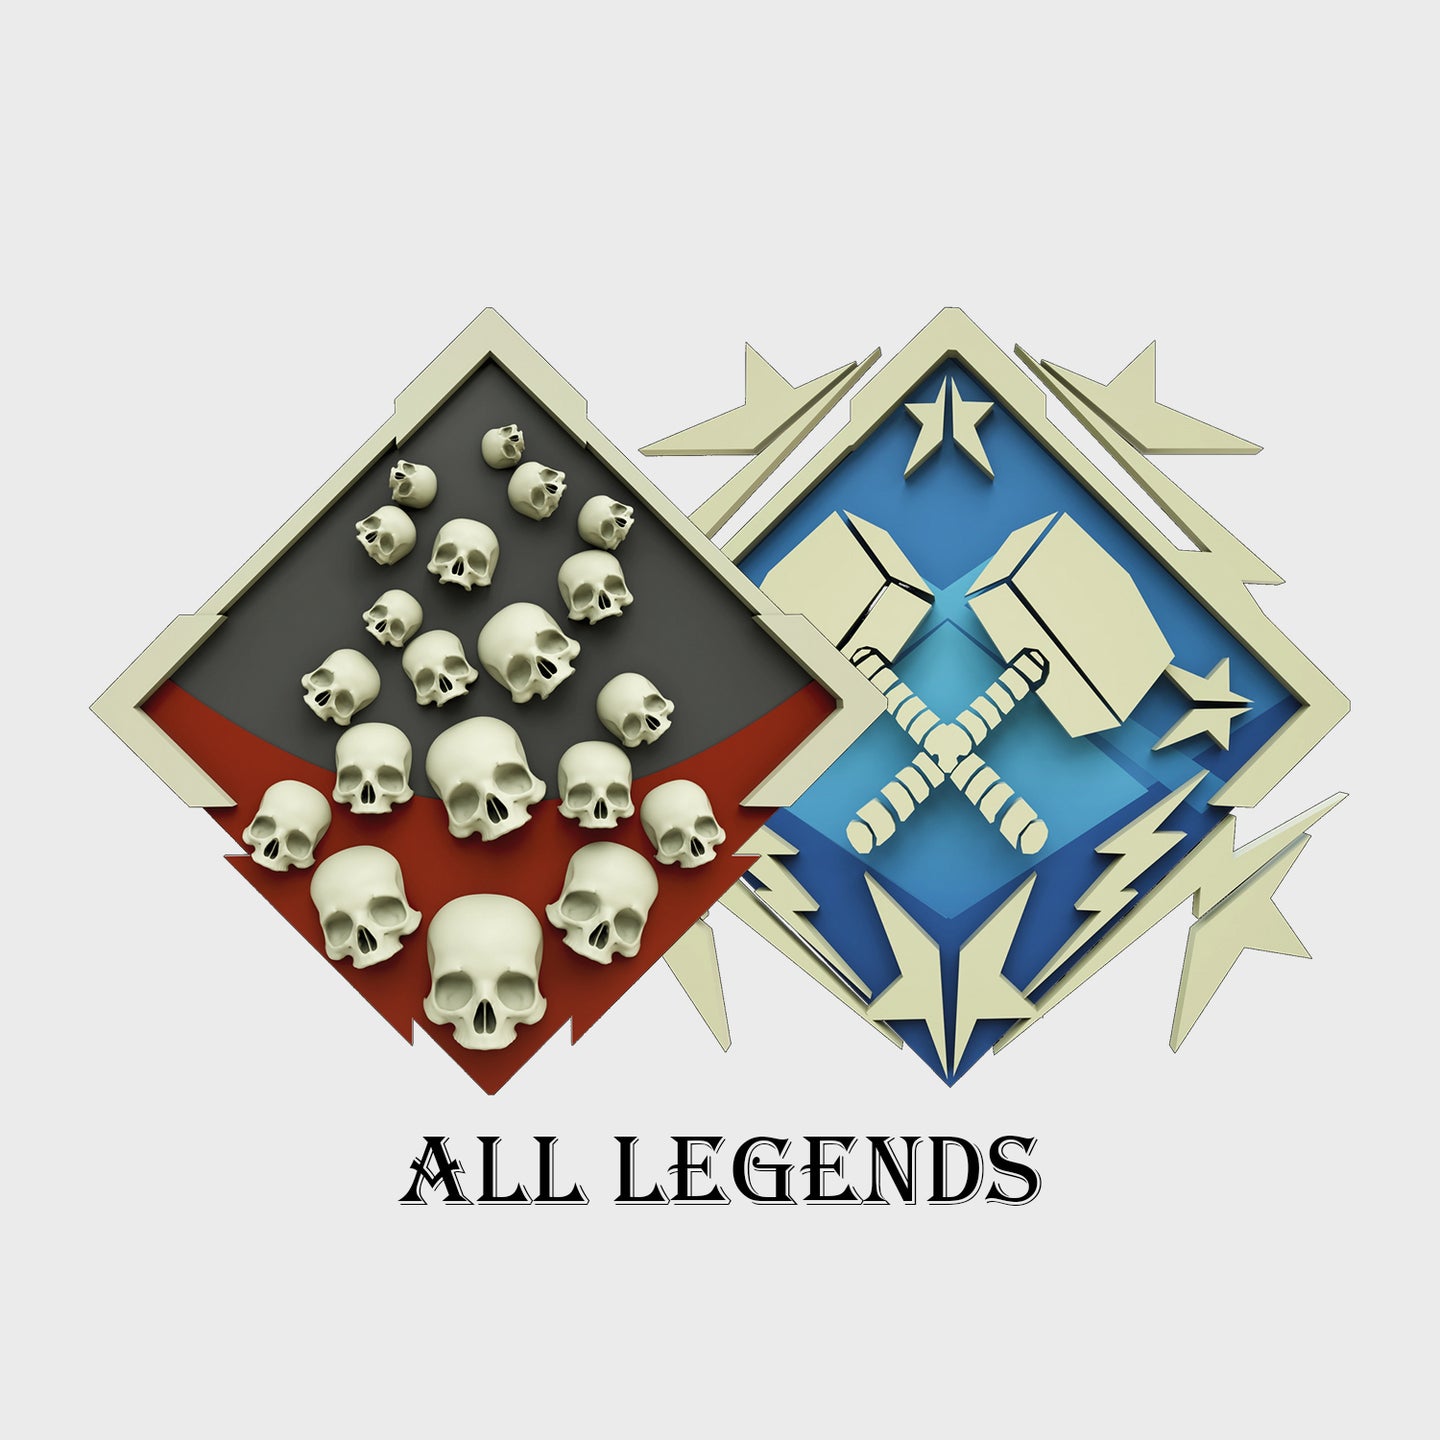 All Legends 4k/20